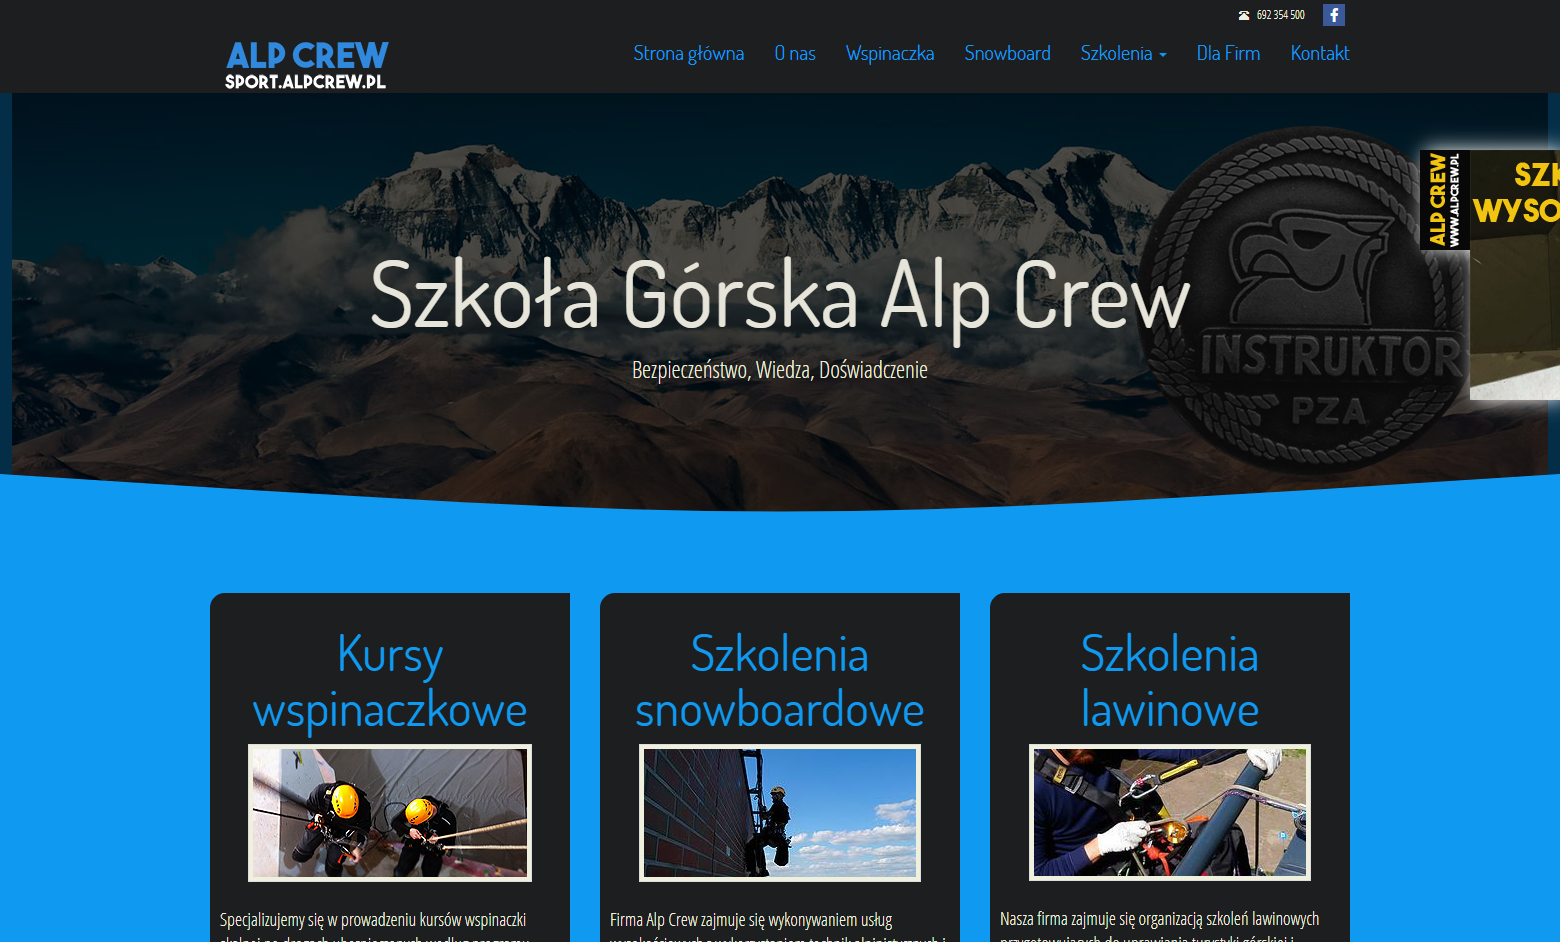 Projekt Sport na AlpCrew.pl